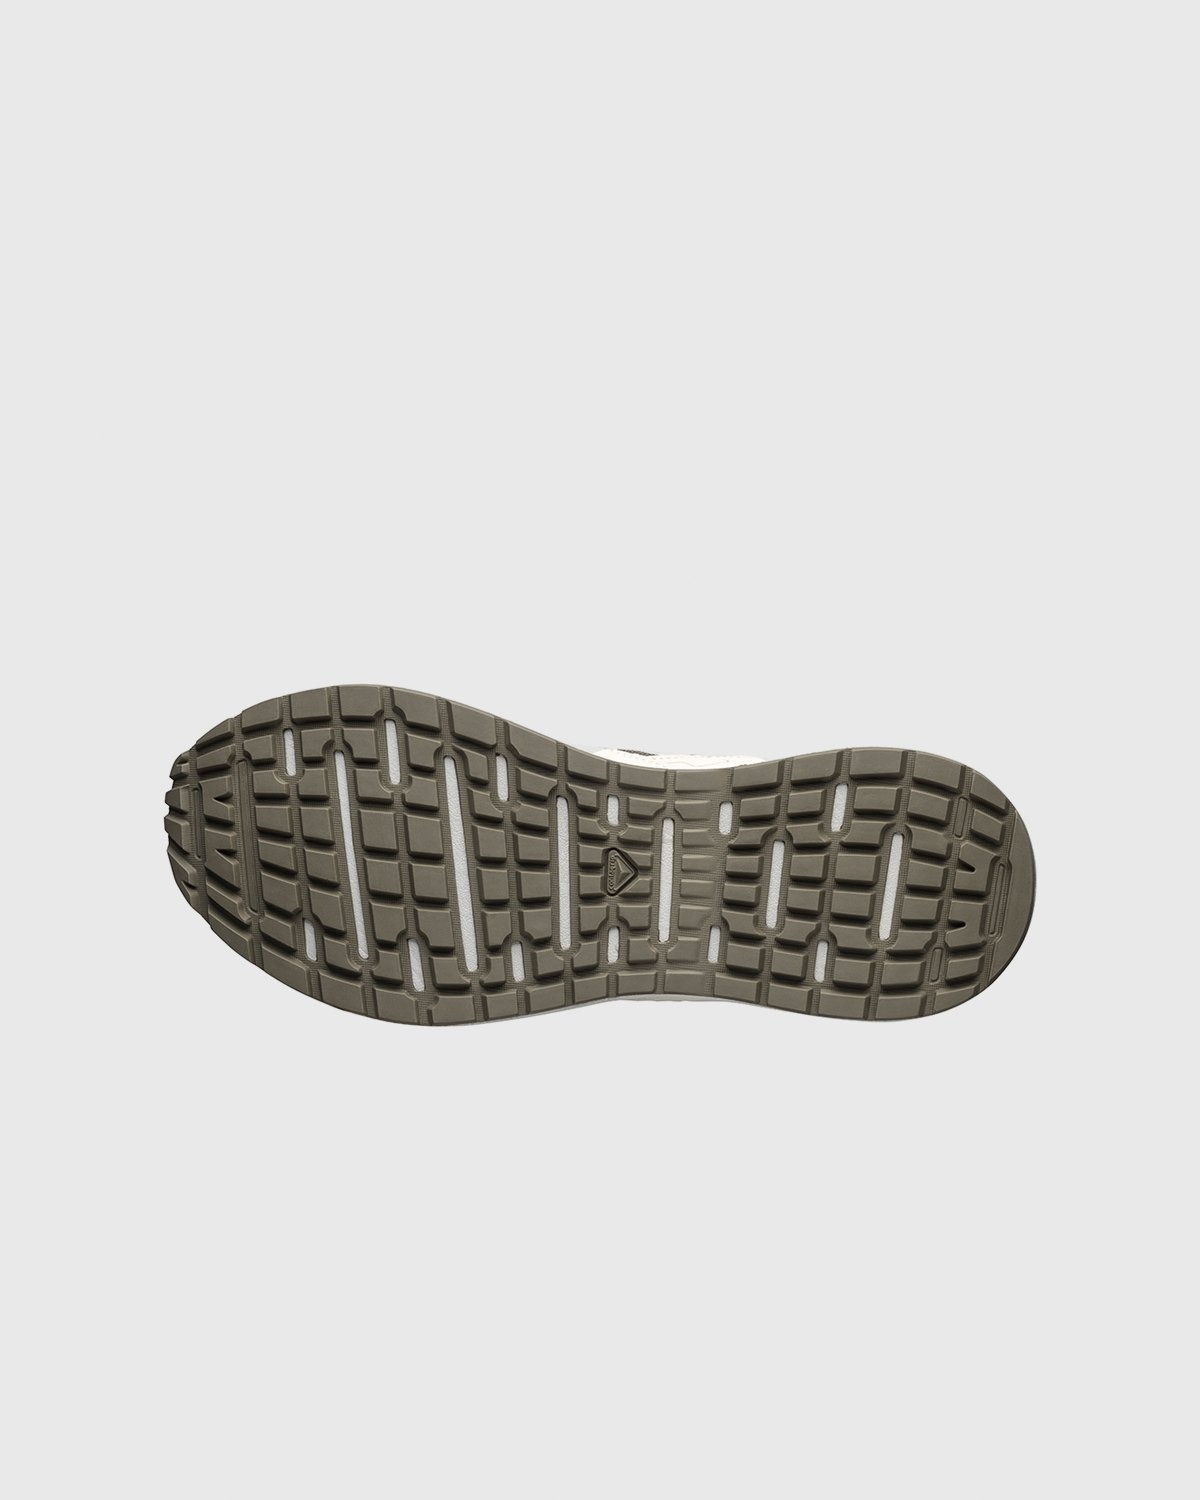 Salomon – Odyssey 1 Advanced Bleached - Low Top Sneakers - Beige - Image 5